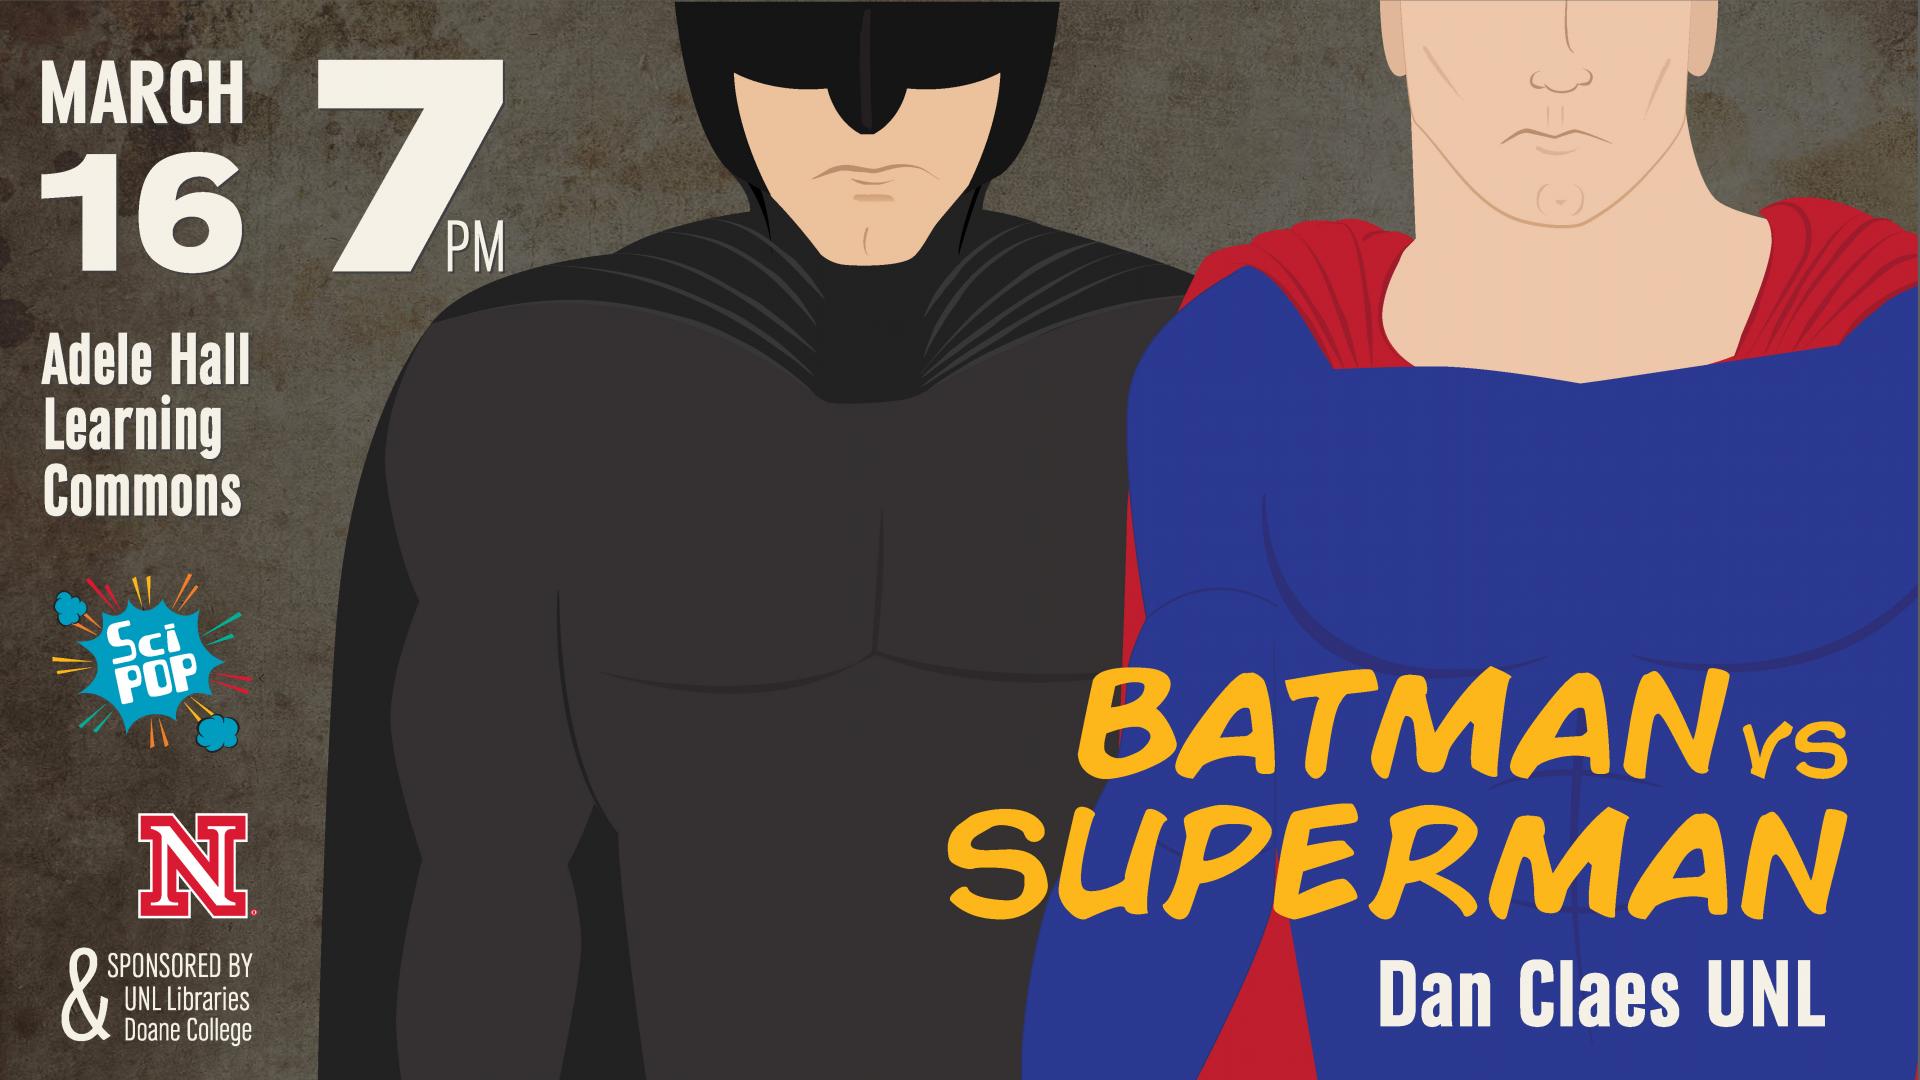 Photo Credit: Batman vs Superman SciPop Talk March 16, 7p.m., Adele Hall Learning Commons